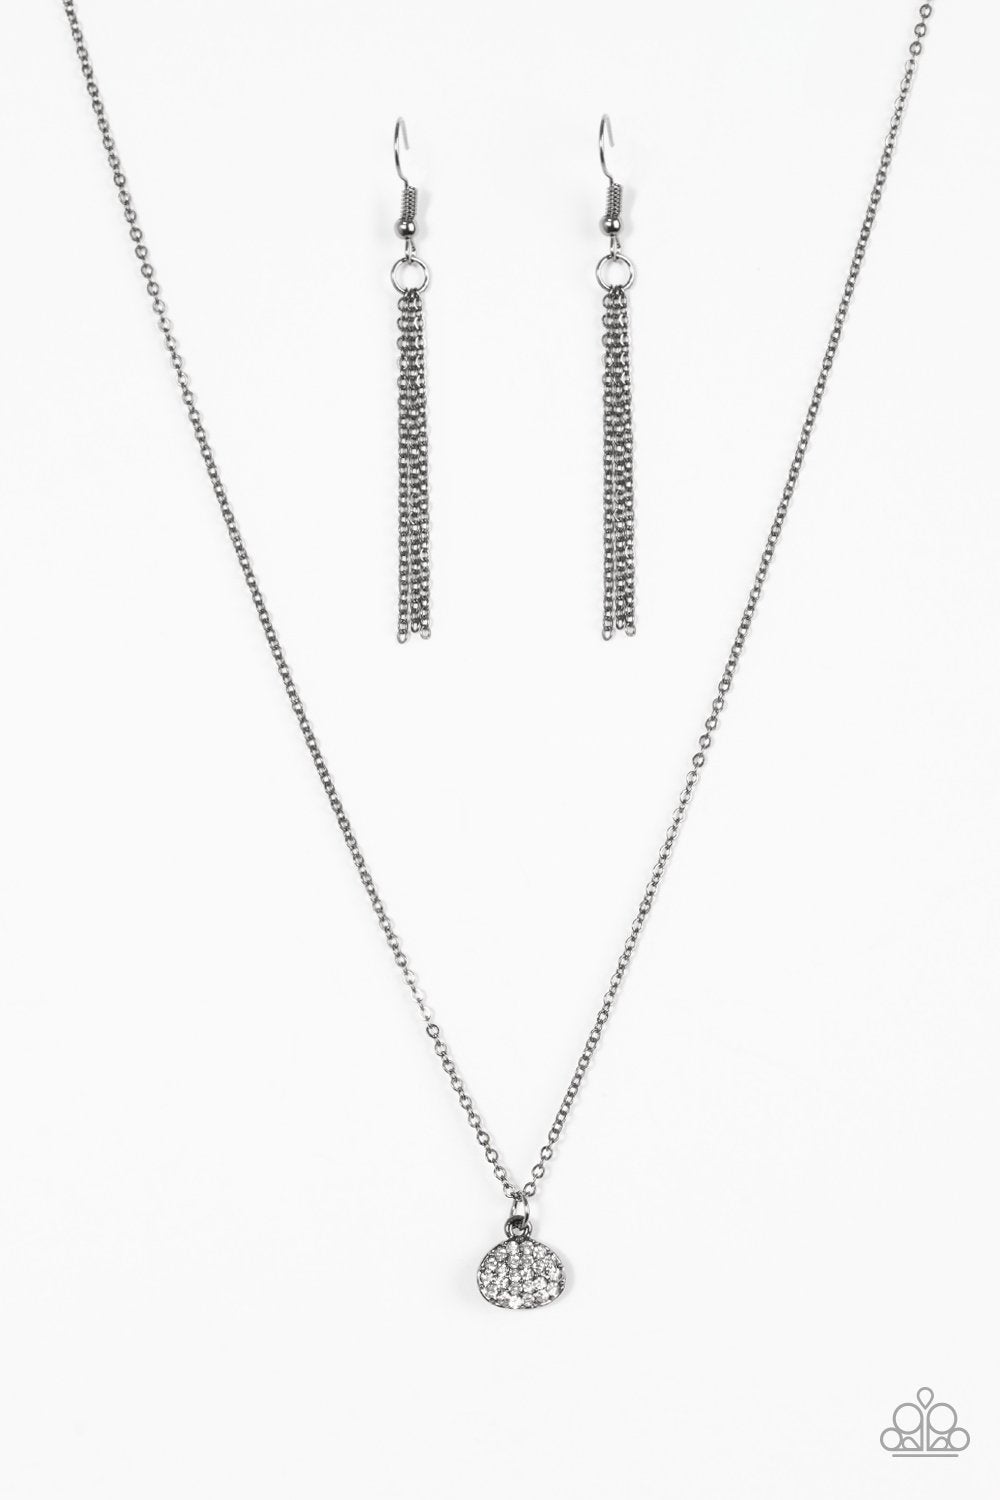 Diamond Debonair Gunmetal Black and White Rhinestone Necklace - Paparazzi Accessories-CarasShop.com - $5 Jewelry by Cara Jewels